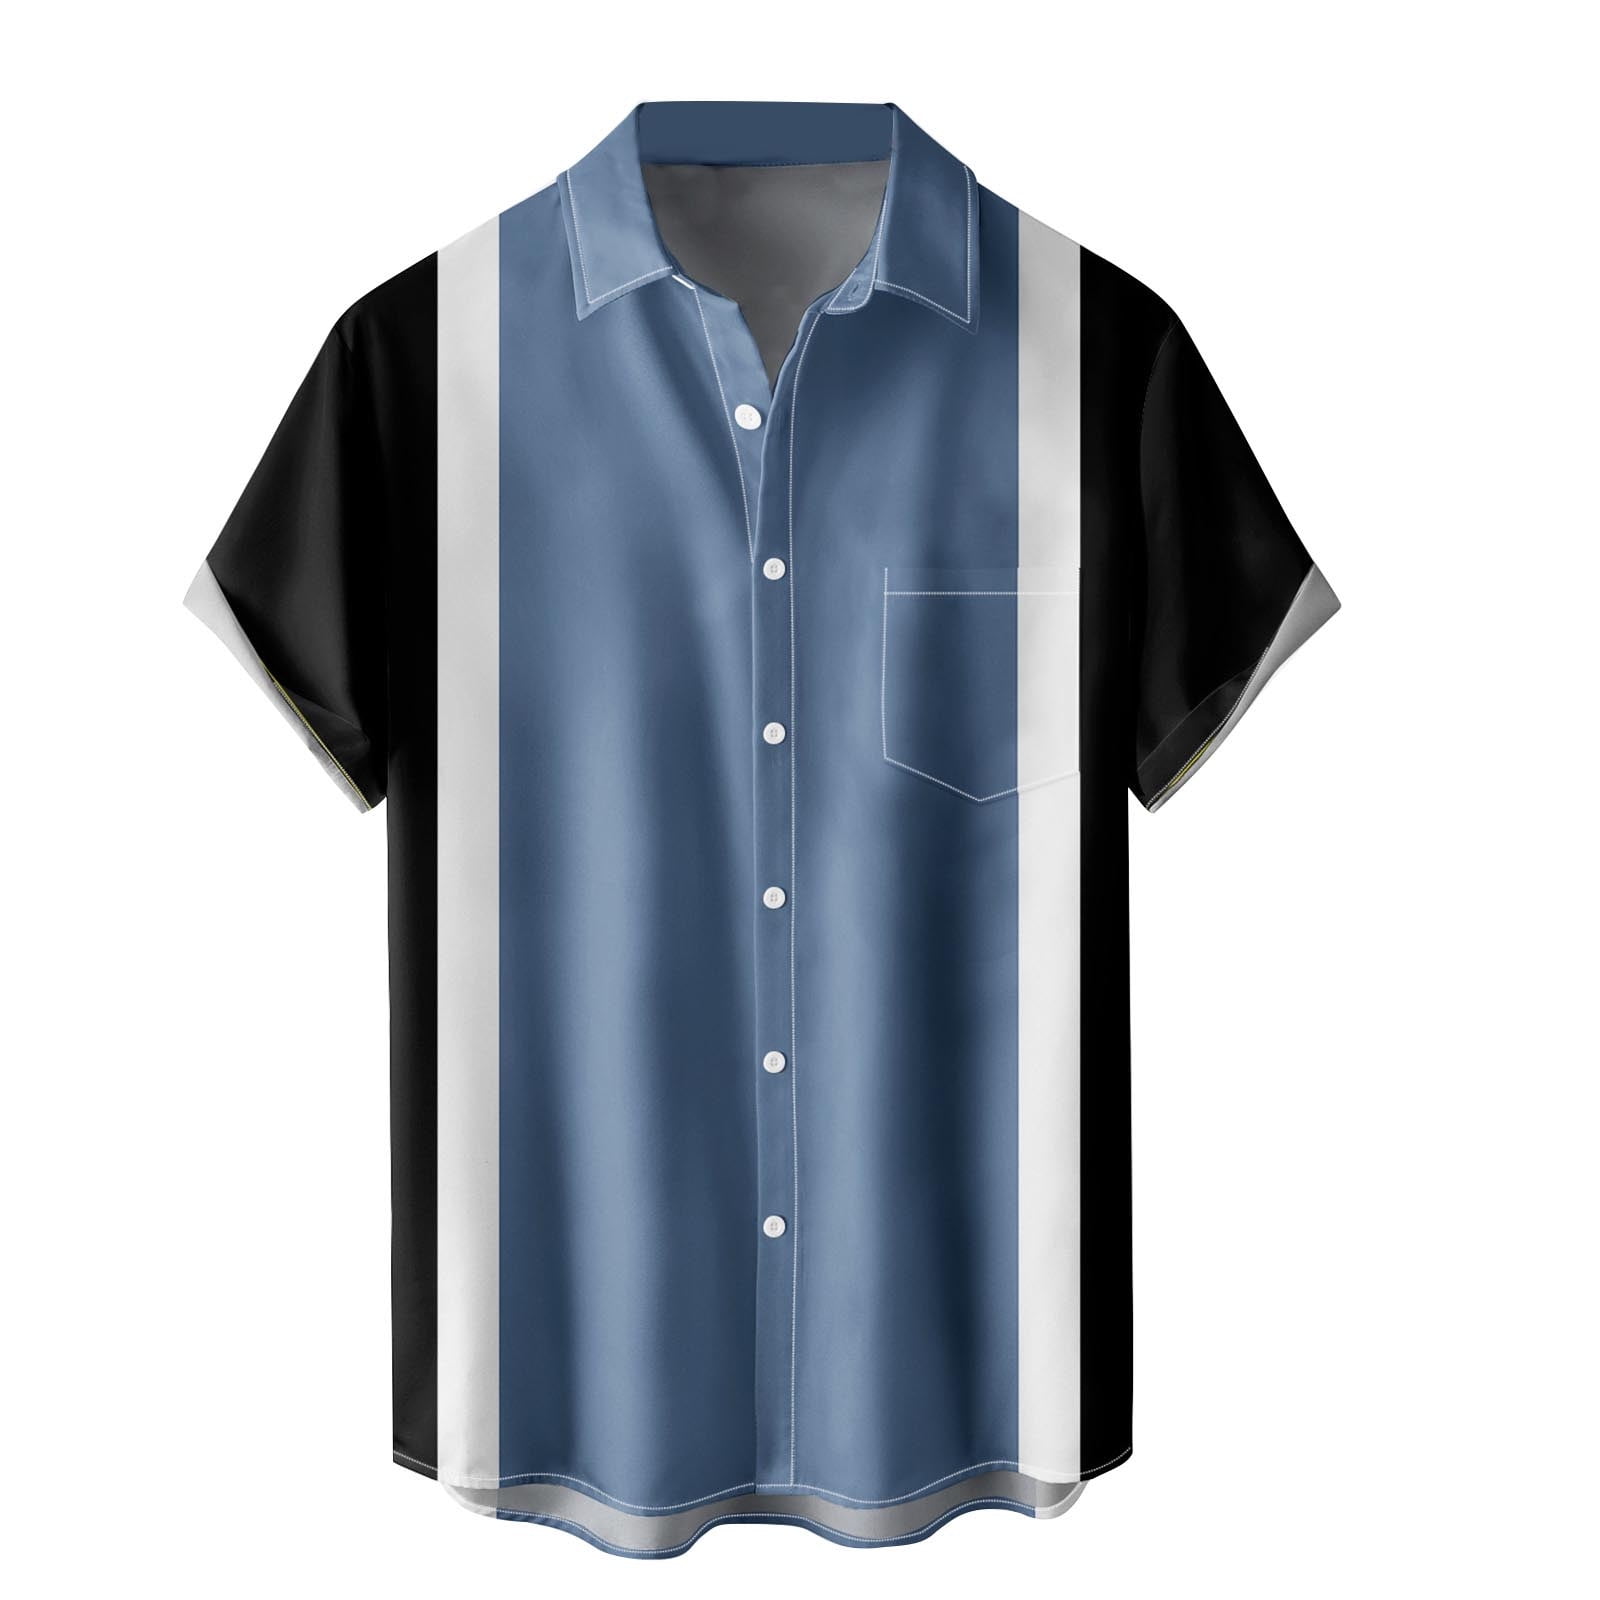 Dovford Shirts for Men,Men's Vintage Bowling Shirt 1950s Retro